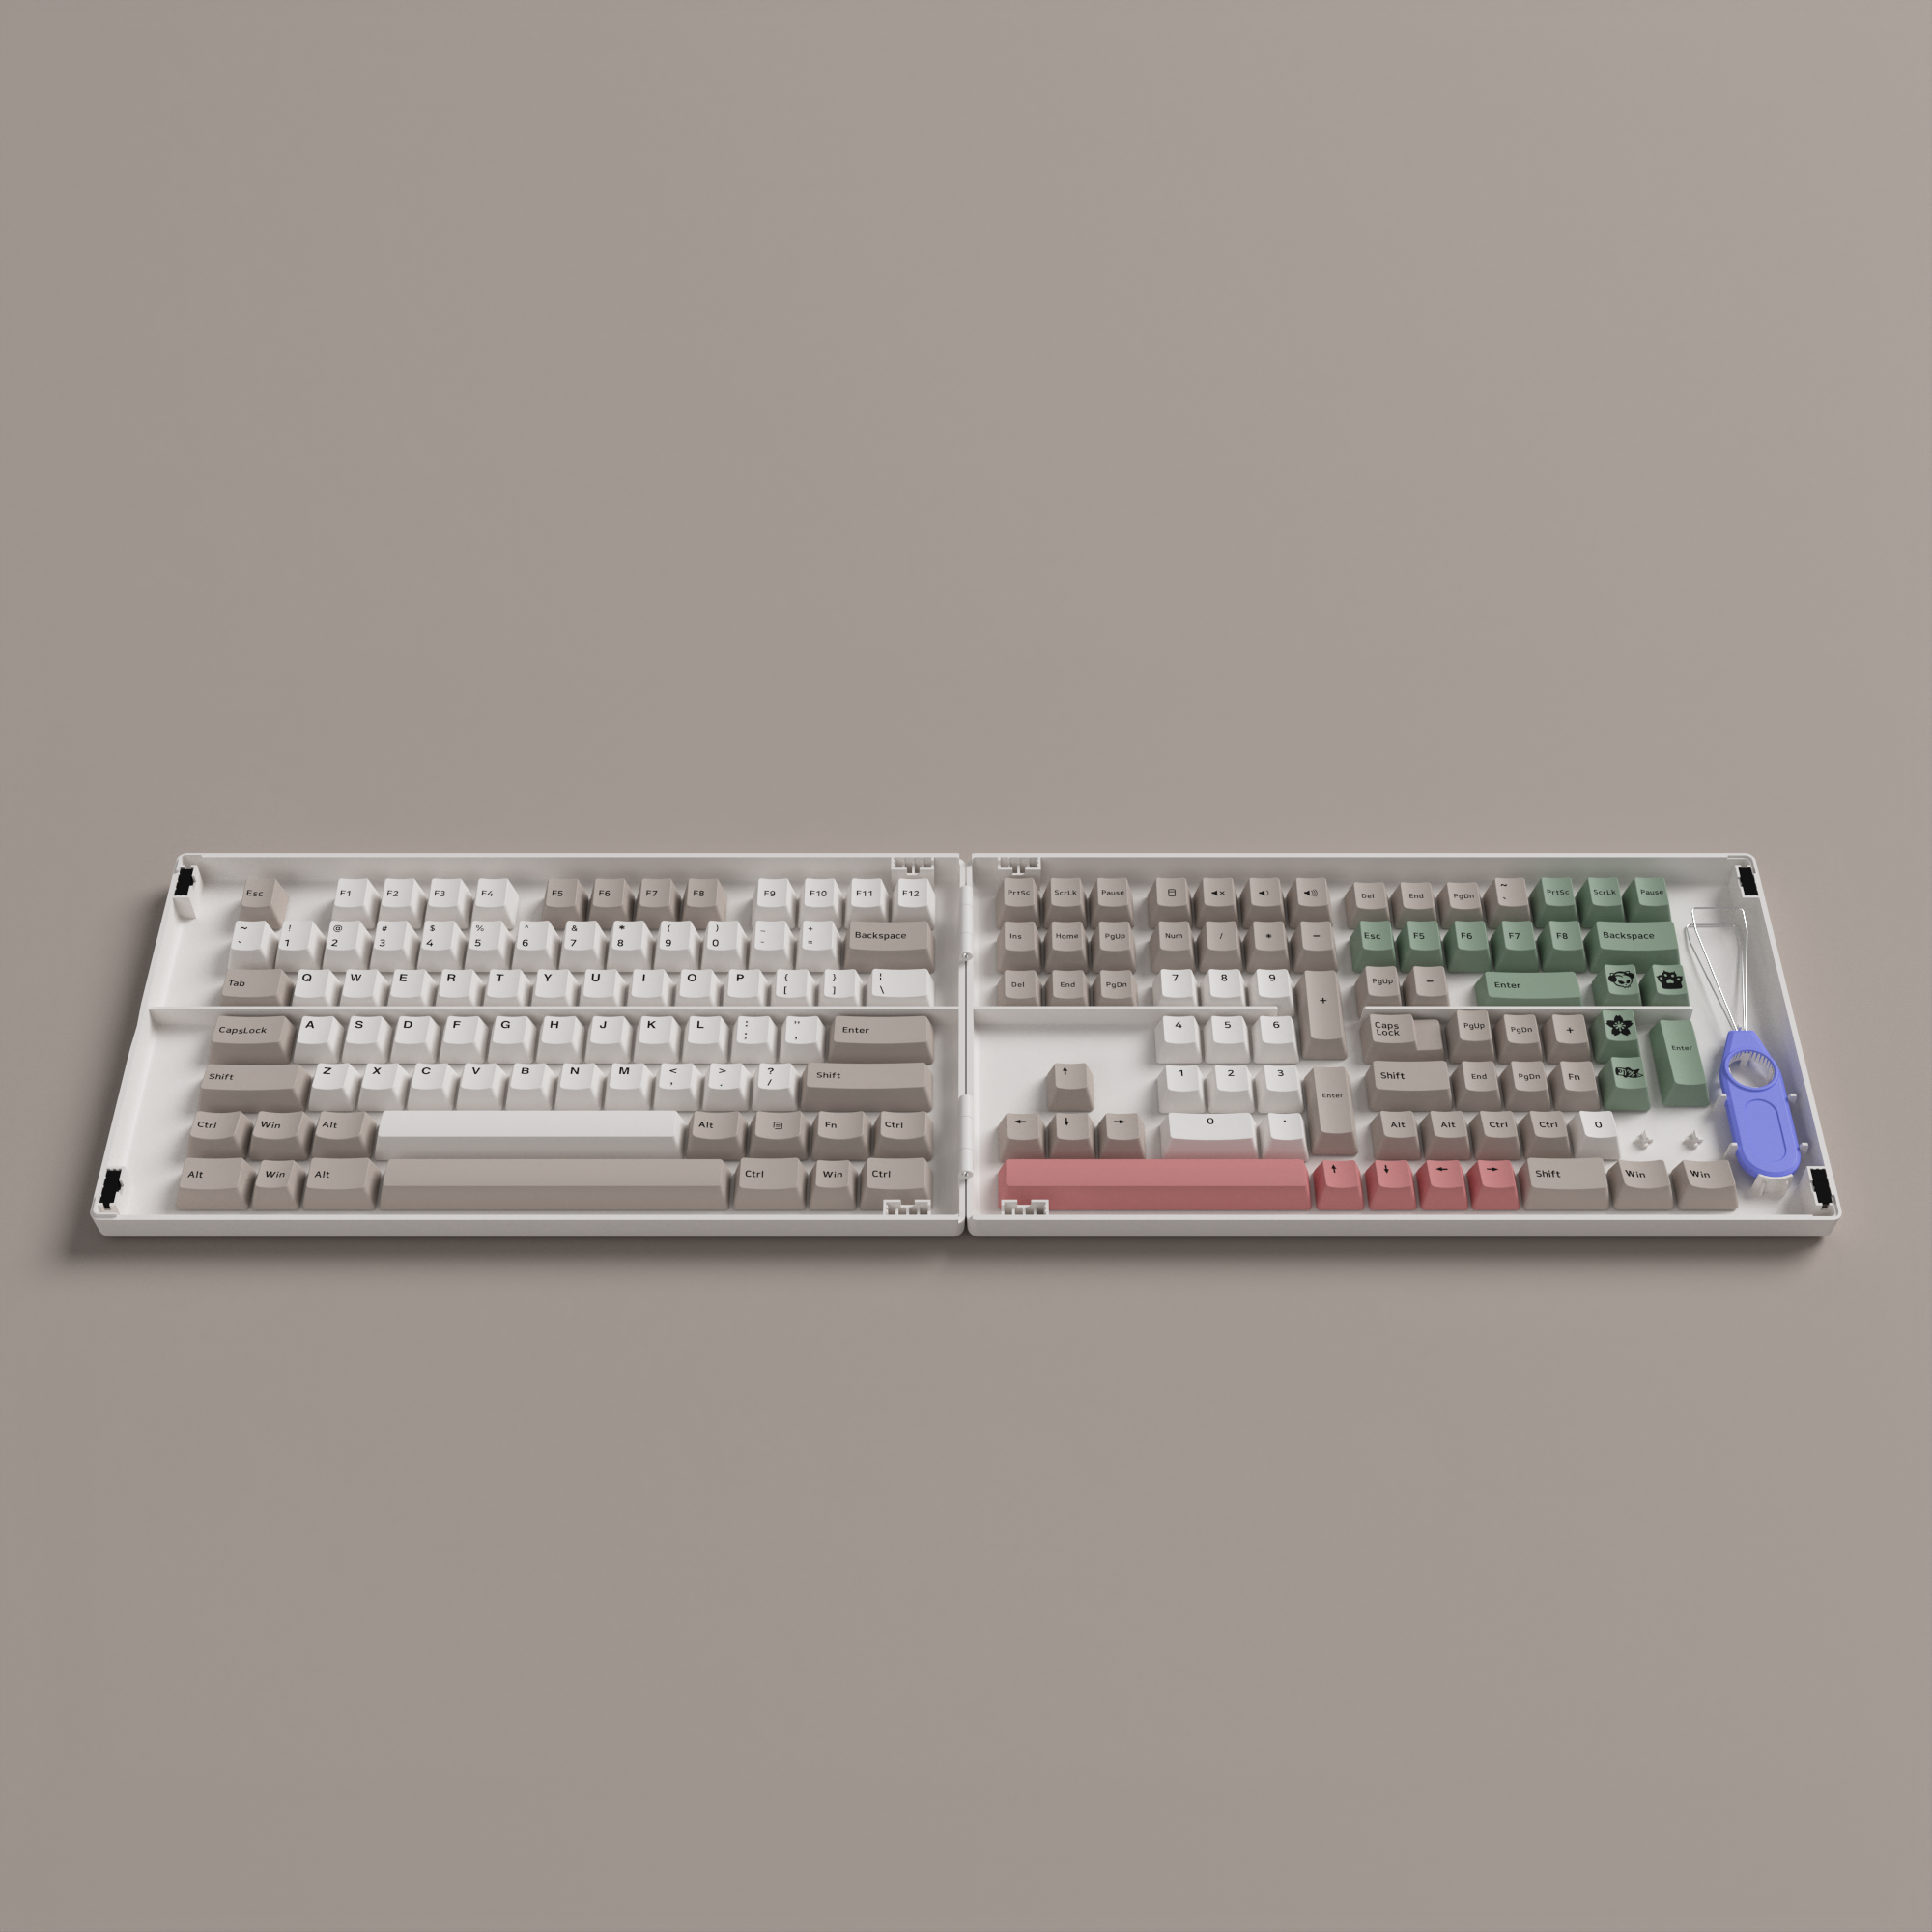 (Discontinued) Cherry/ASA 9009 Retro Keycap Set